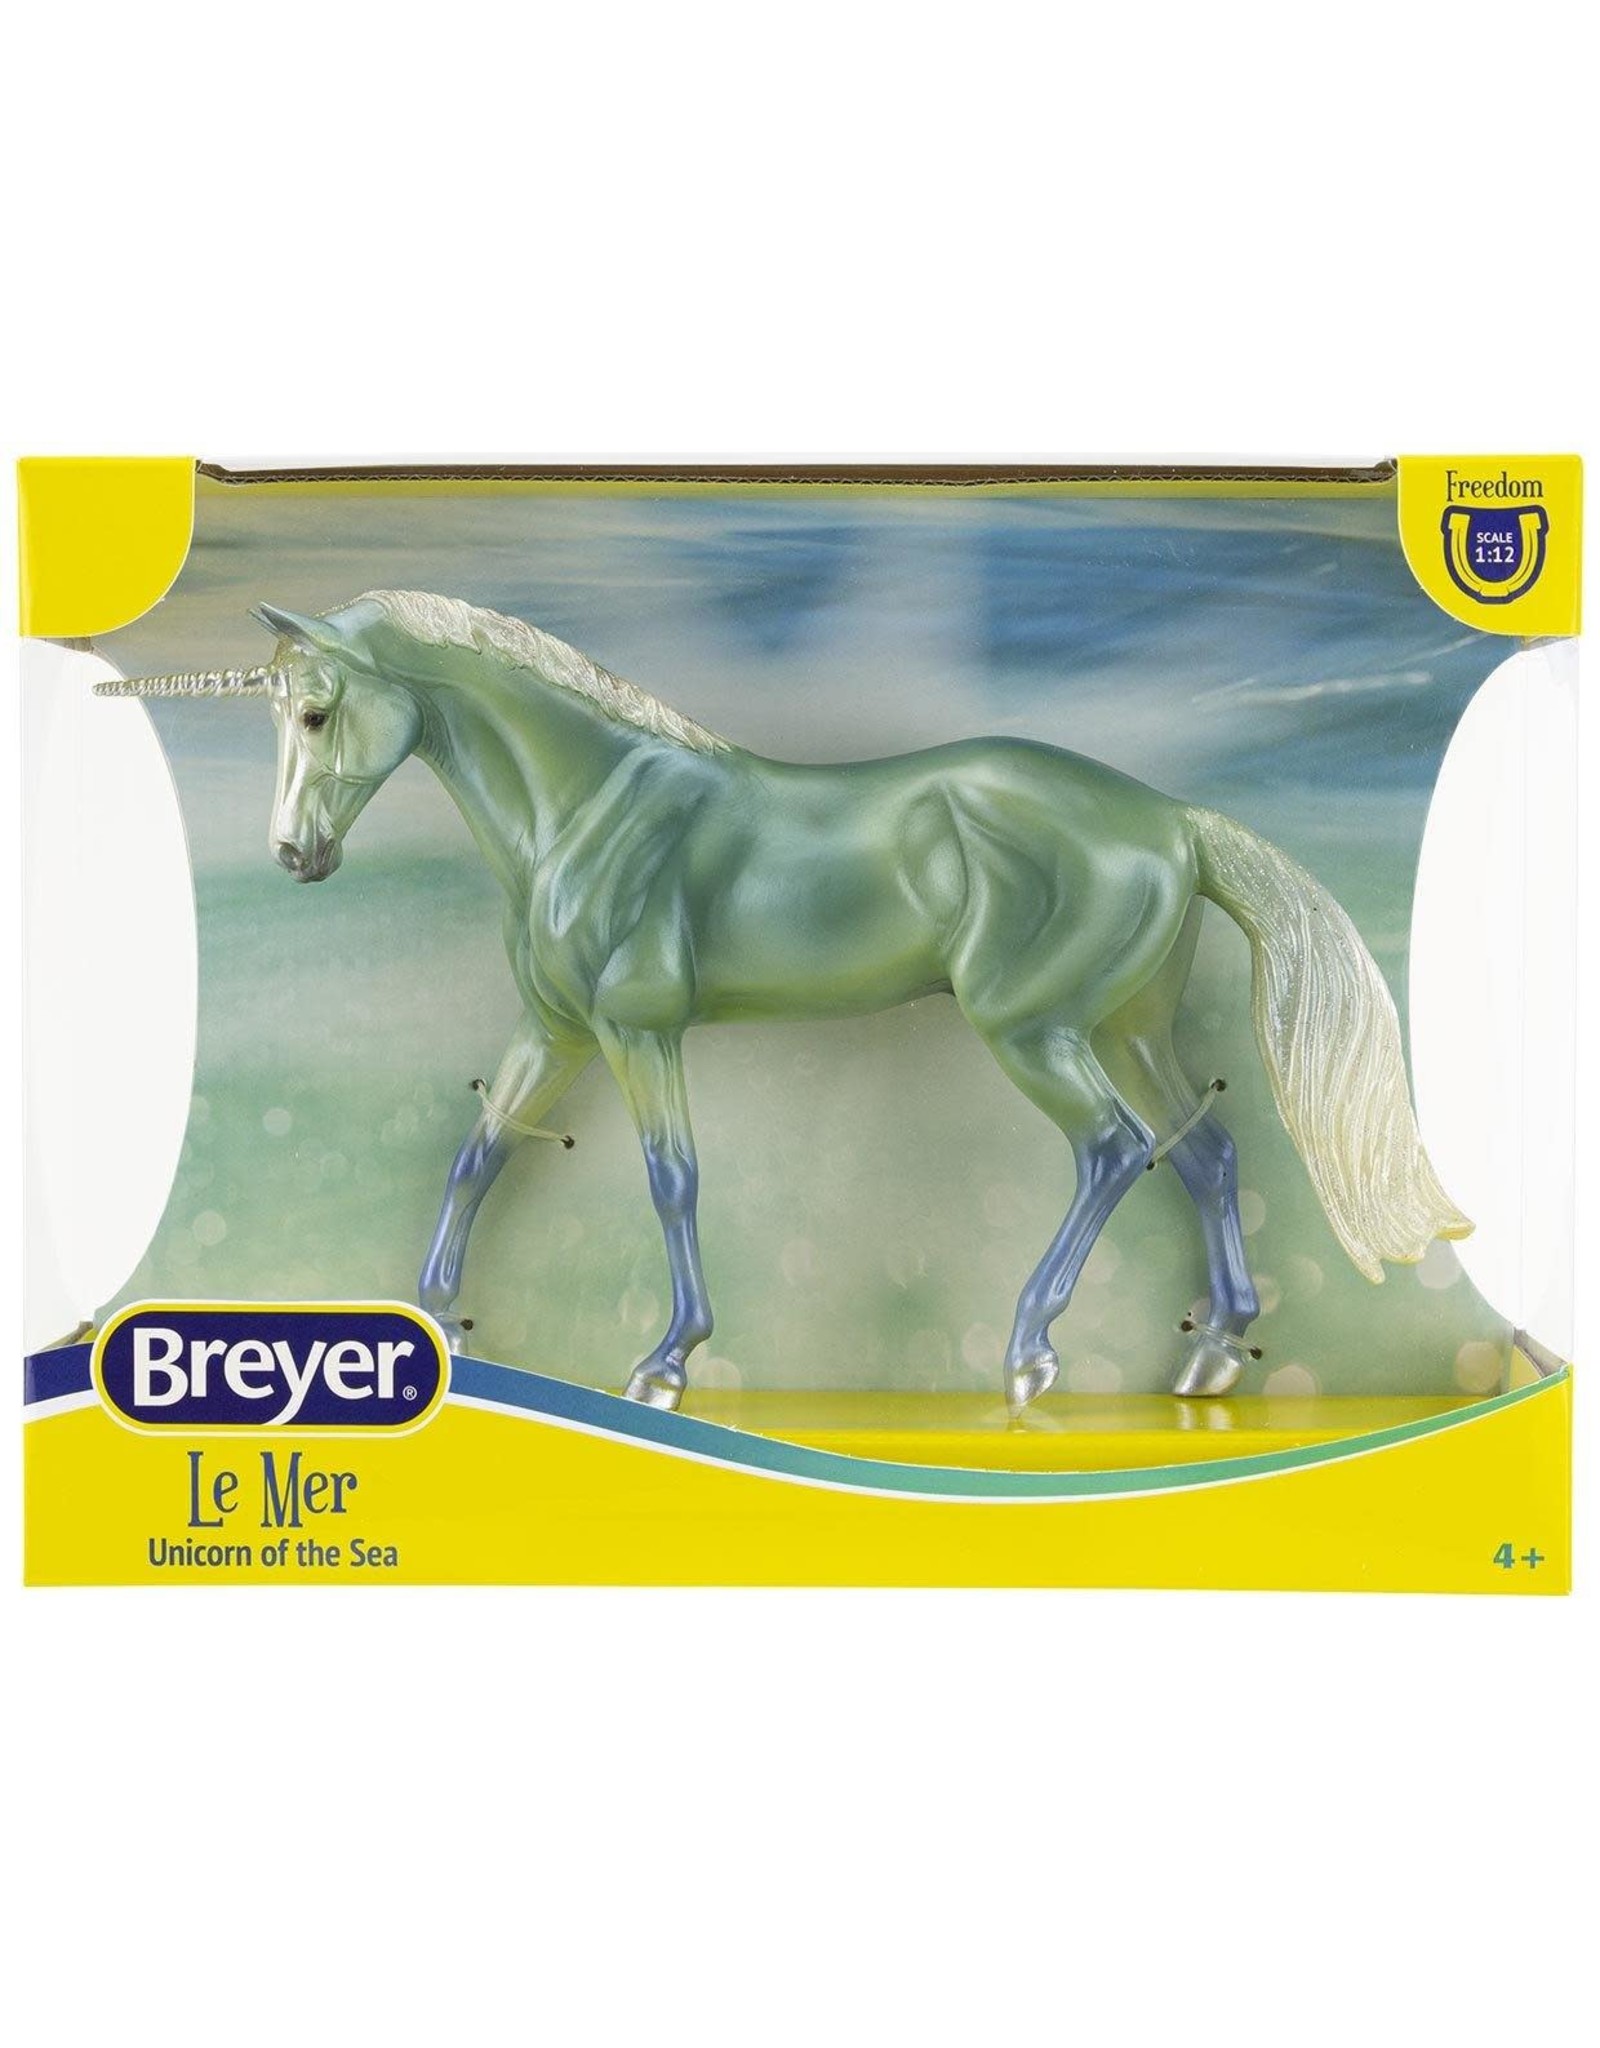 Breyer Le Mer Unicorn of the Sea